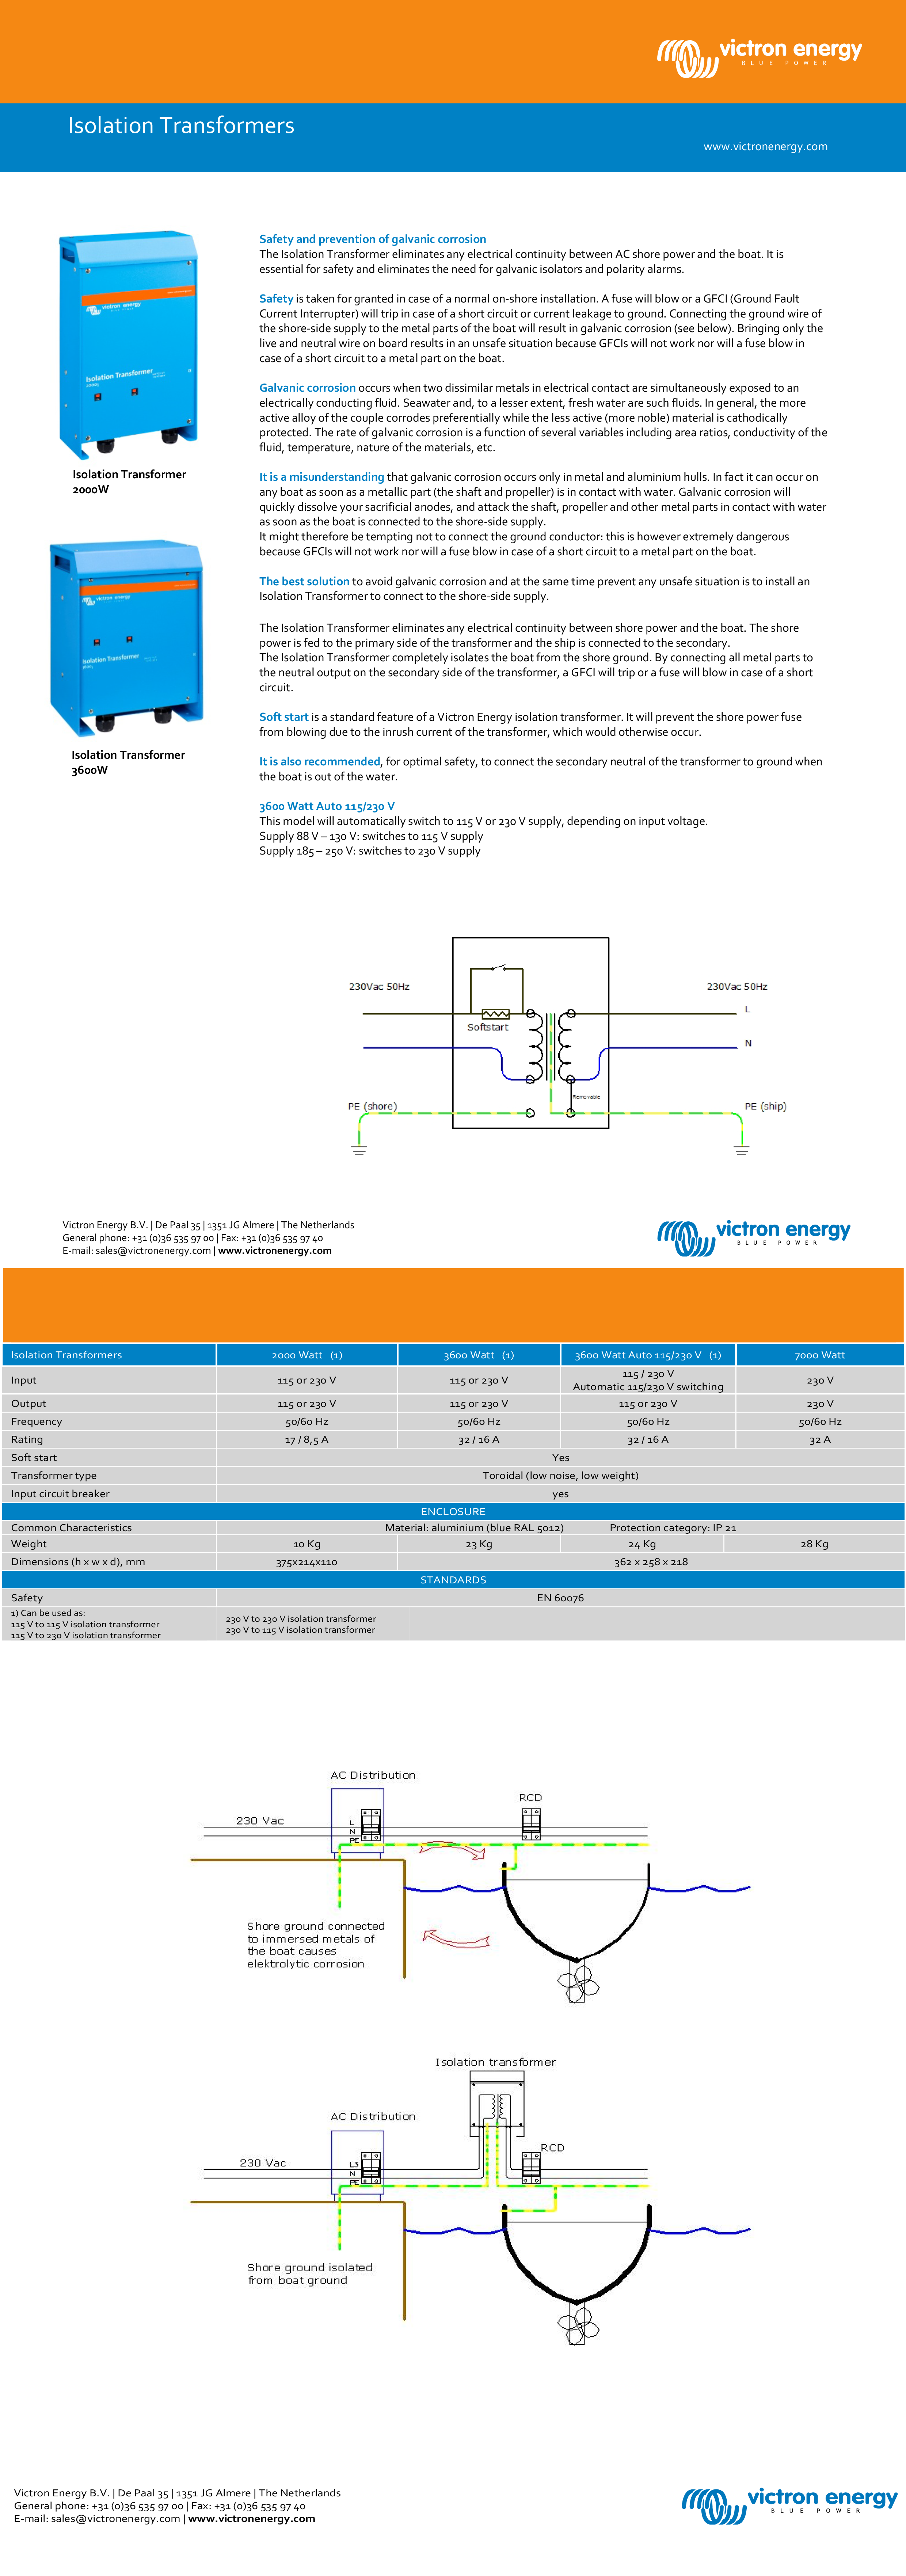 Victron Isolation transfrormer 2000W 115/230V